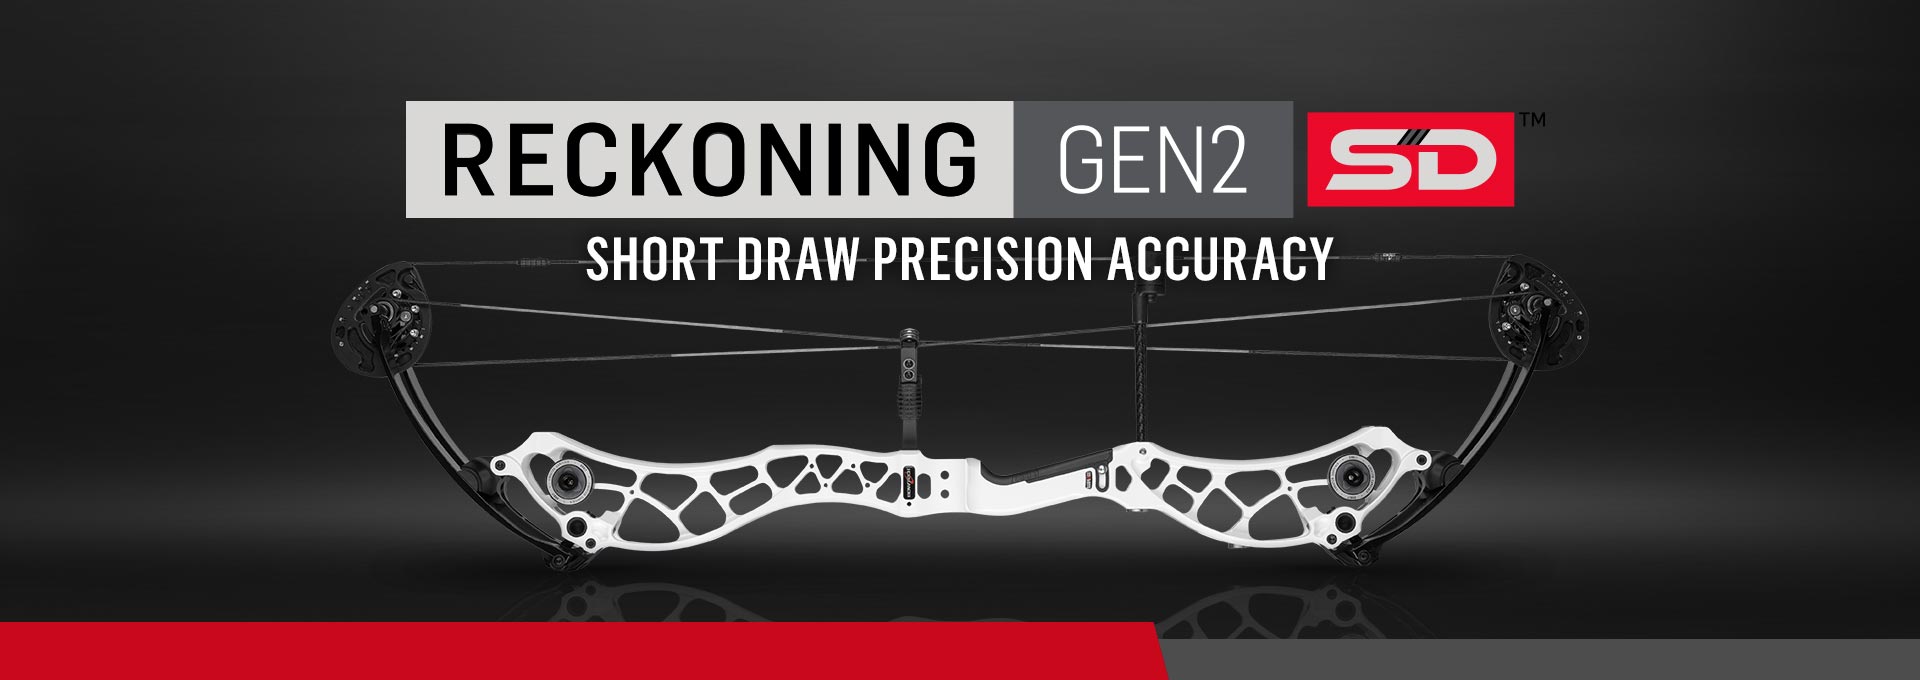 Reckoning Gen2 SD - Short Draw Precision Accuracy